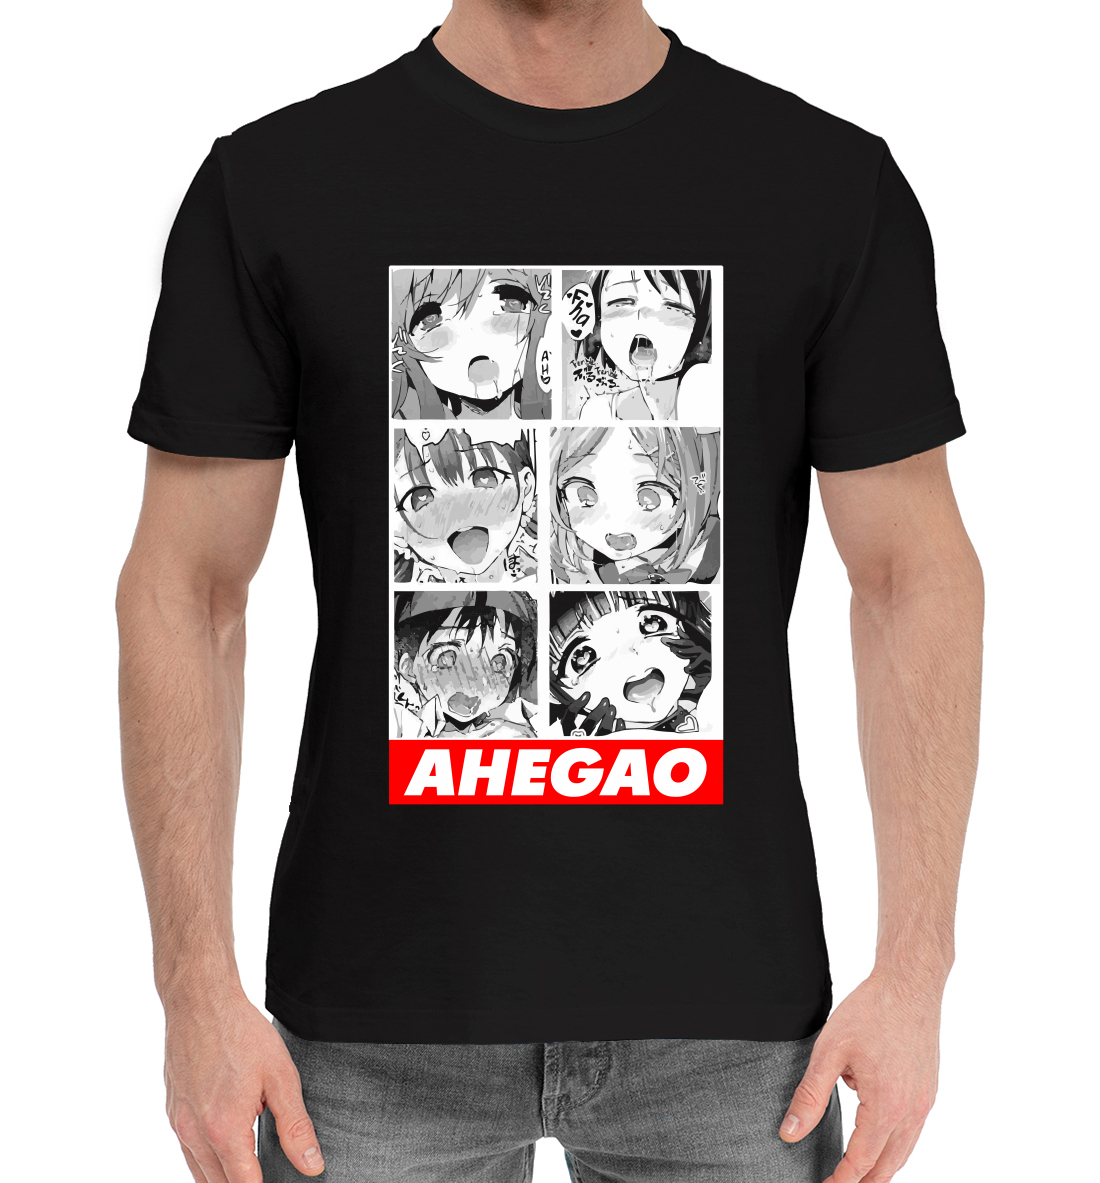 Мужская Хлопковая футболка с принтом Ahegao, артикул AHG-886087-hfu-2mp